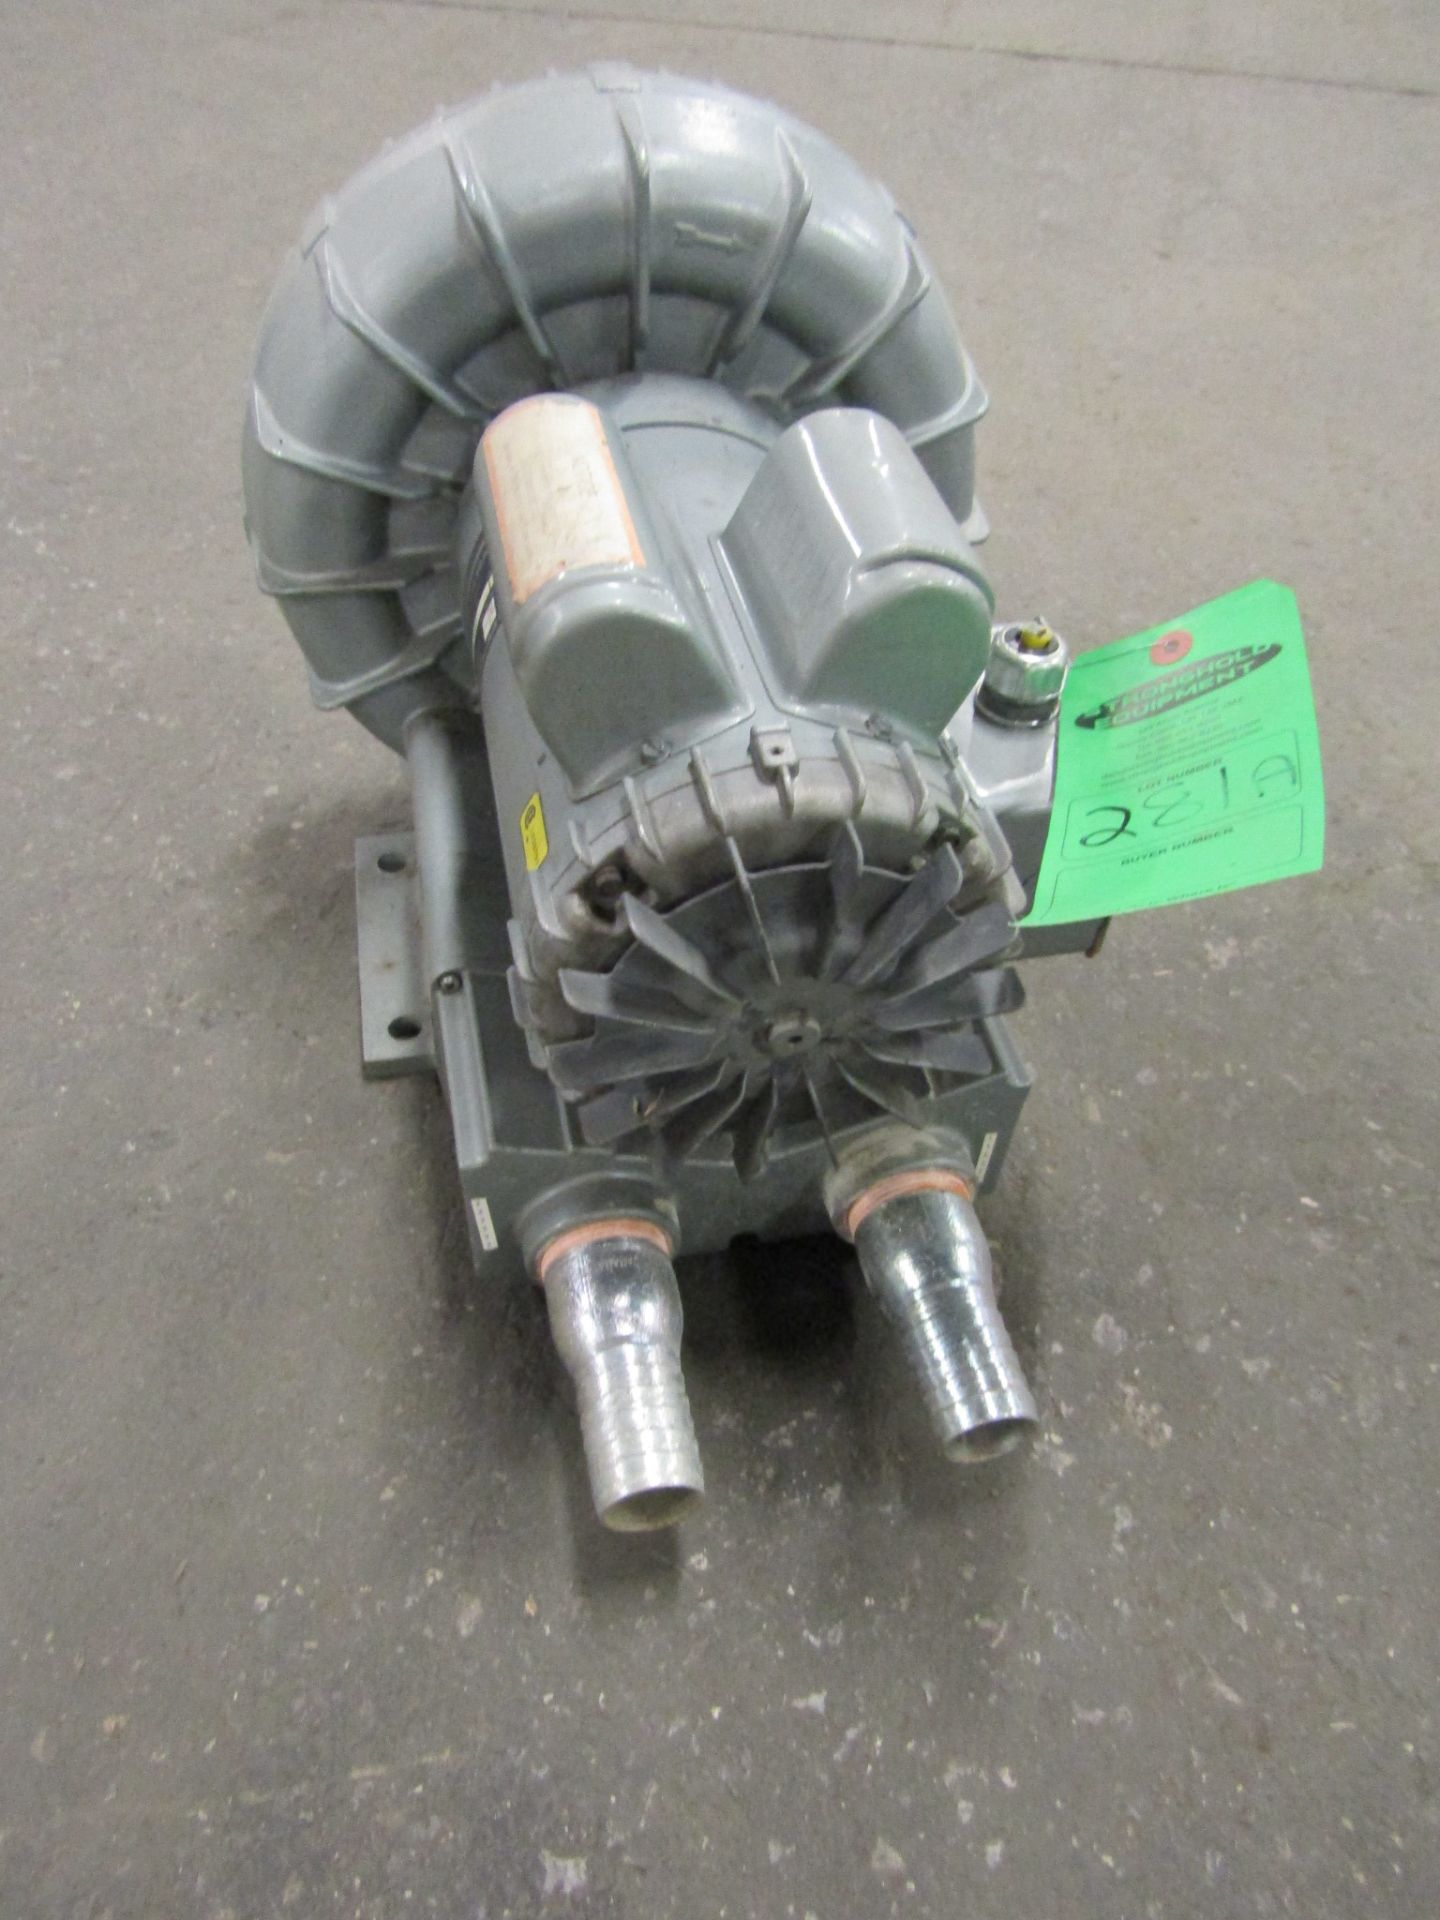 Gast Blower Unit - Regenair Air Pump model R5-125-1 - Image 2 of 2